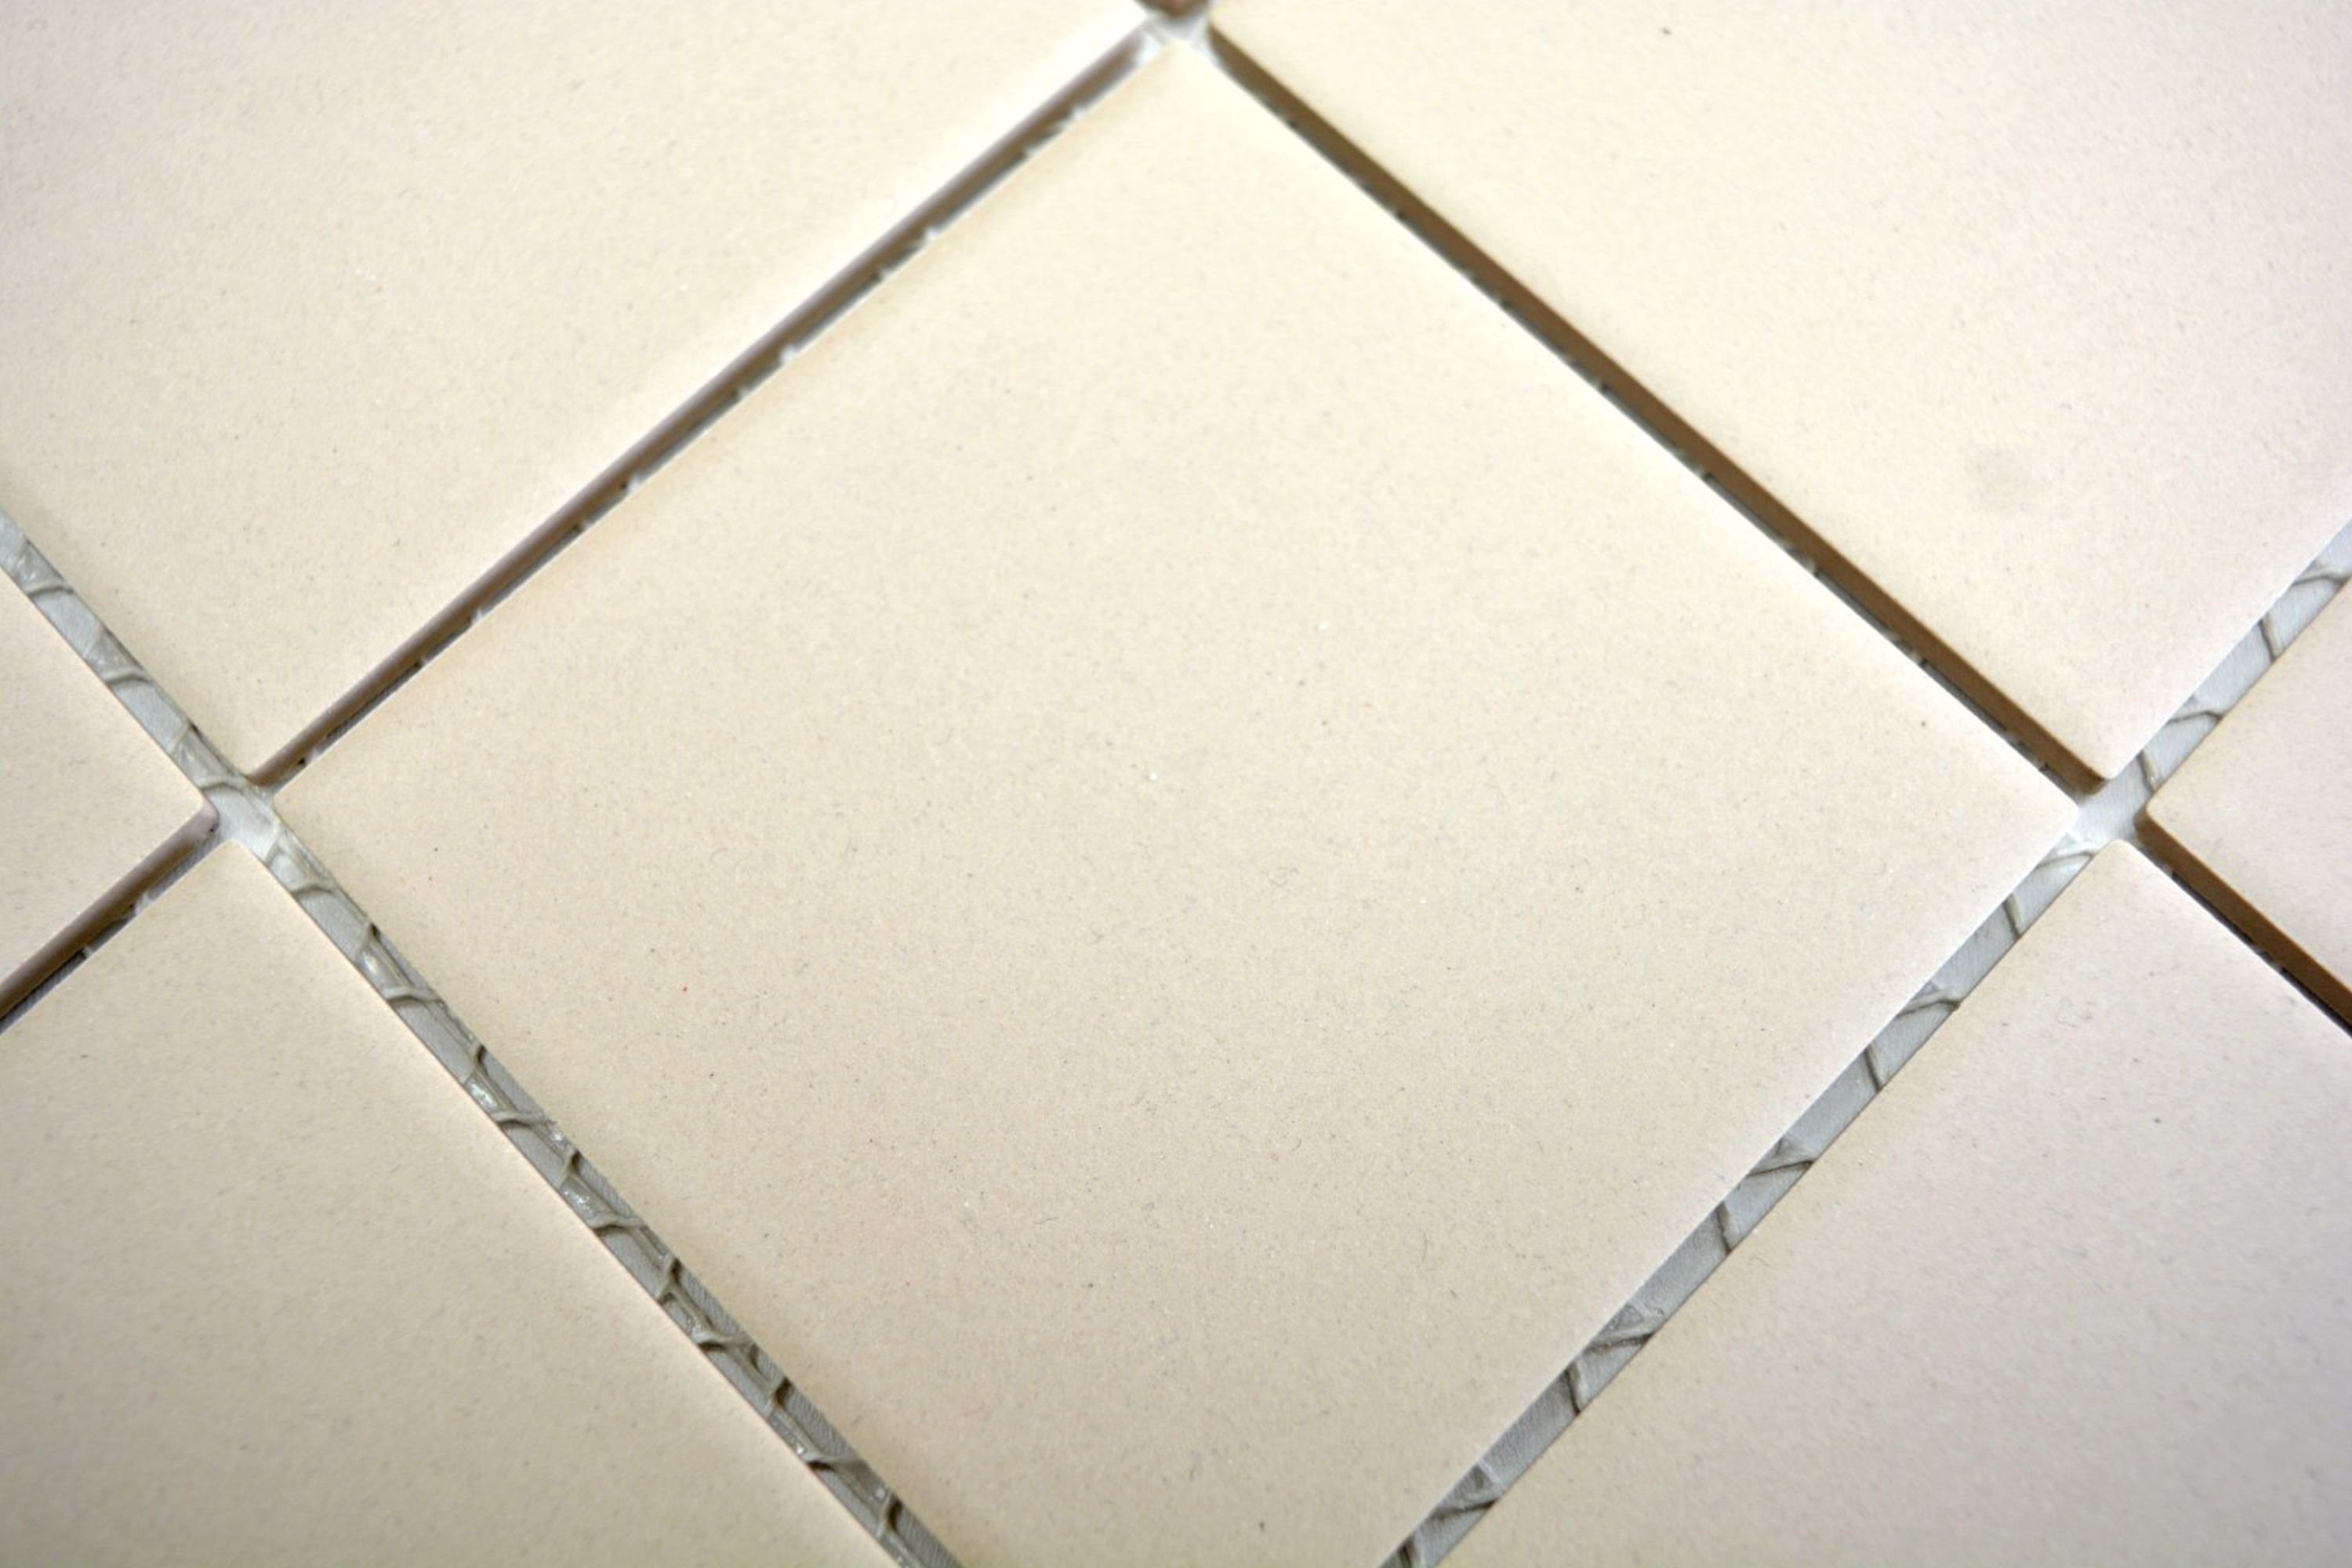 Matten 10 Mosani unglasiert hellbeige Mosaikfliesen / Mosaik Quadratisches matt Keramik